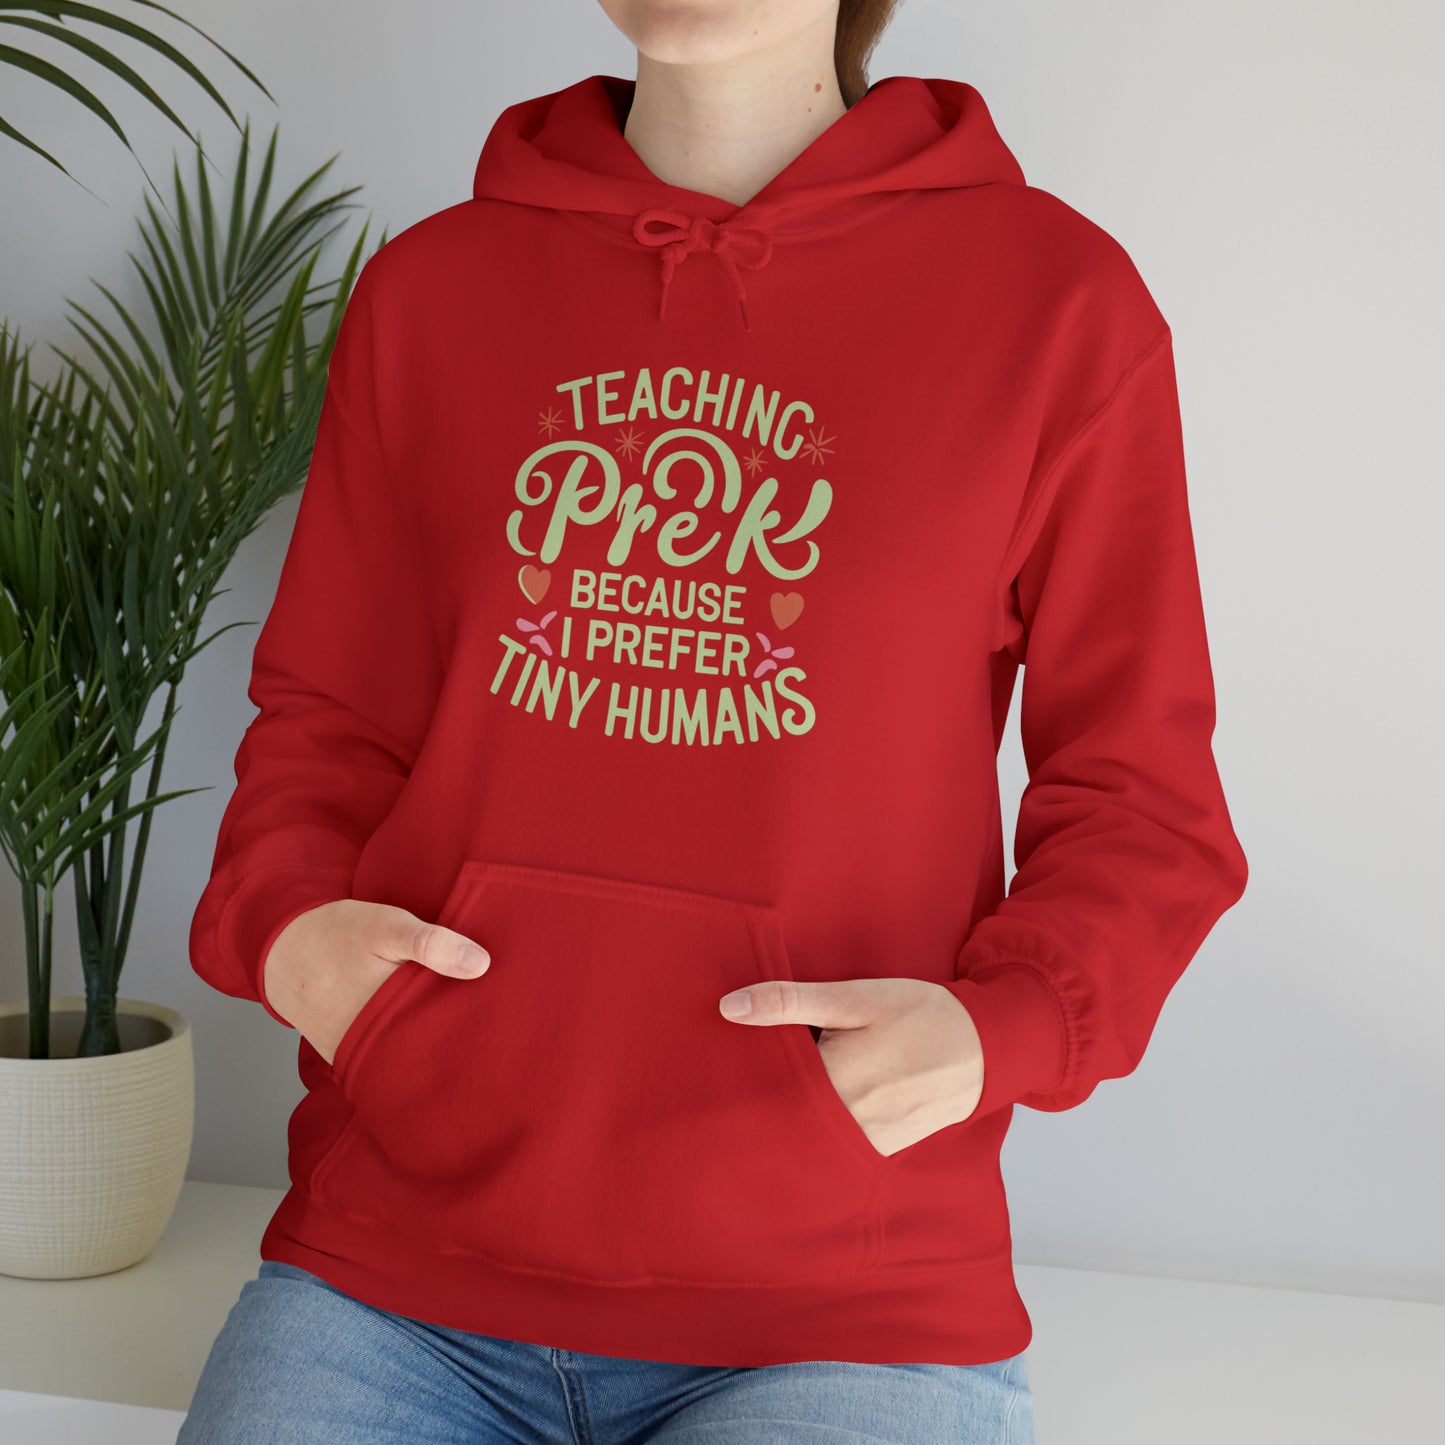 PreK Teacher Hoodie - "Teaching Preschool Because I Prefer Tiny Humans"